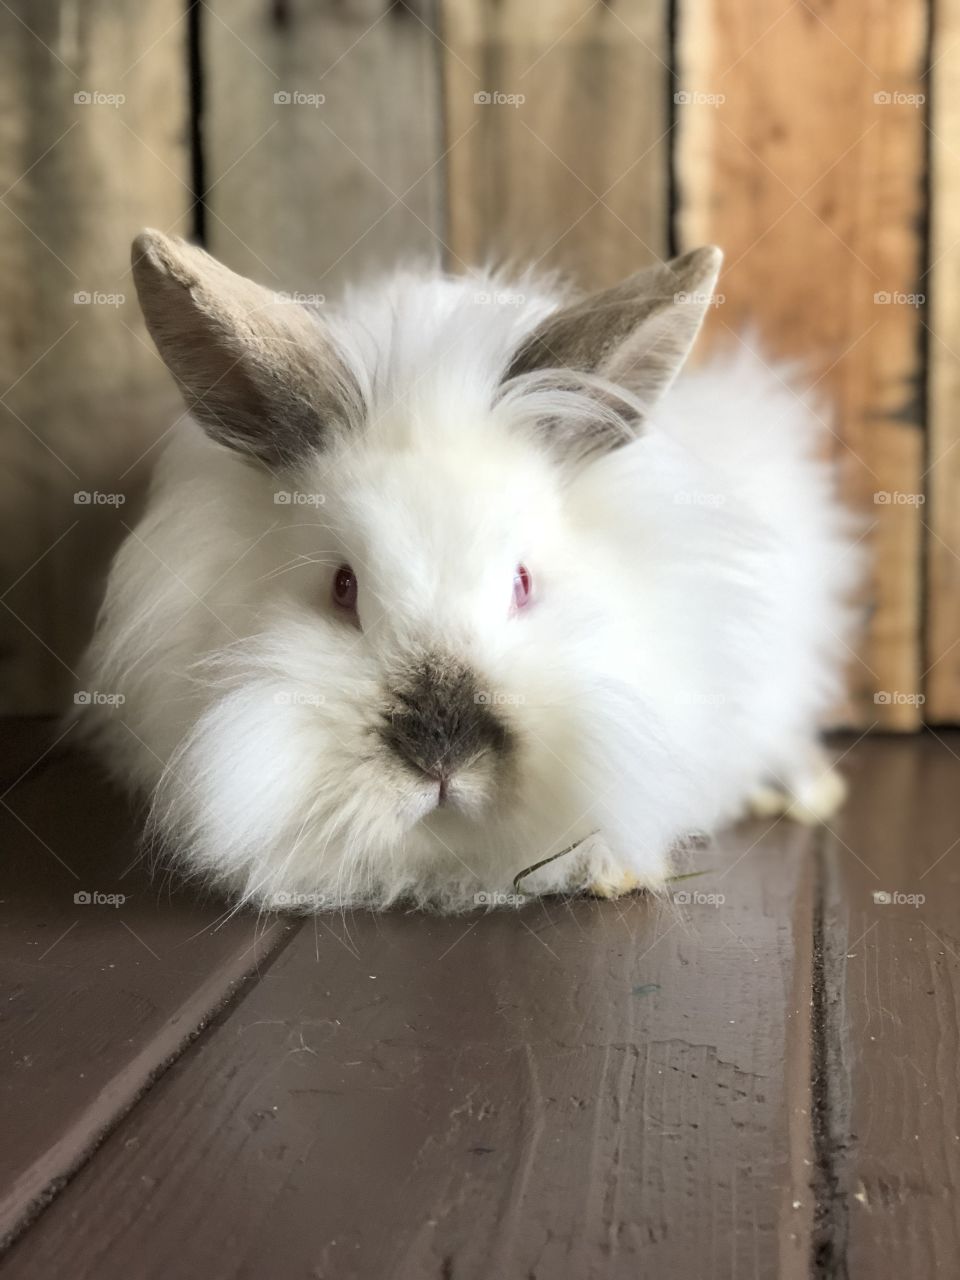 Fluffy bunny 